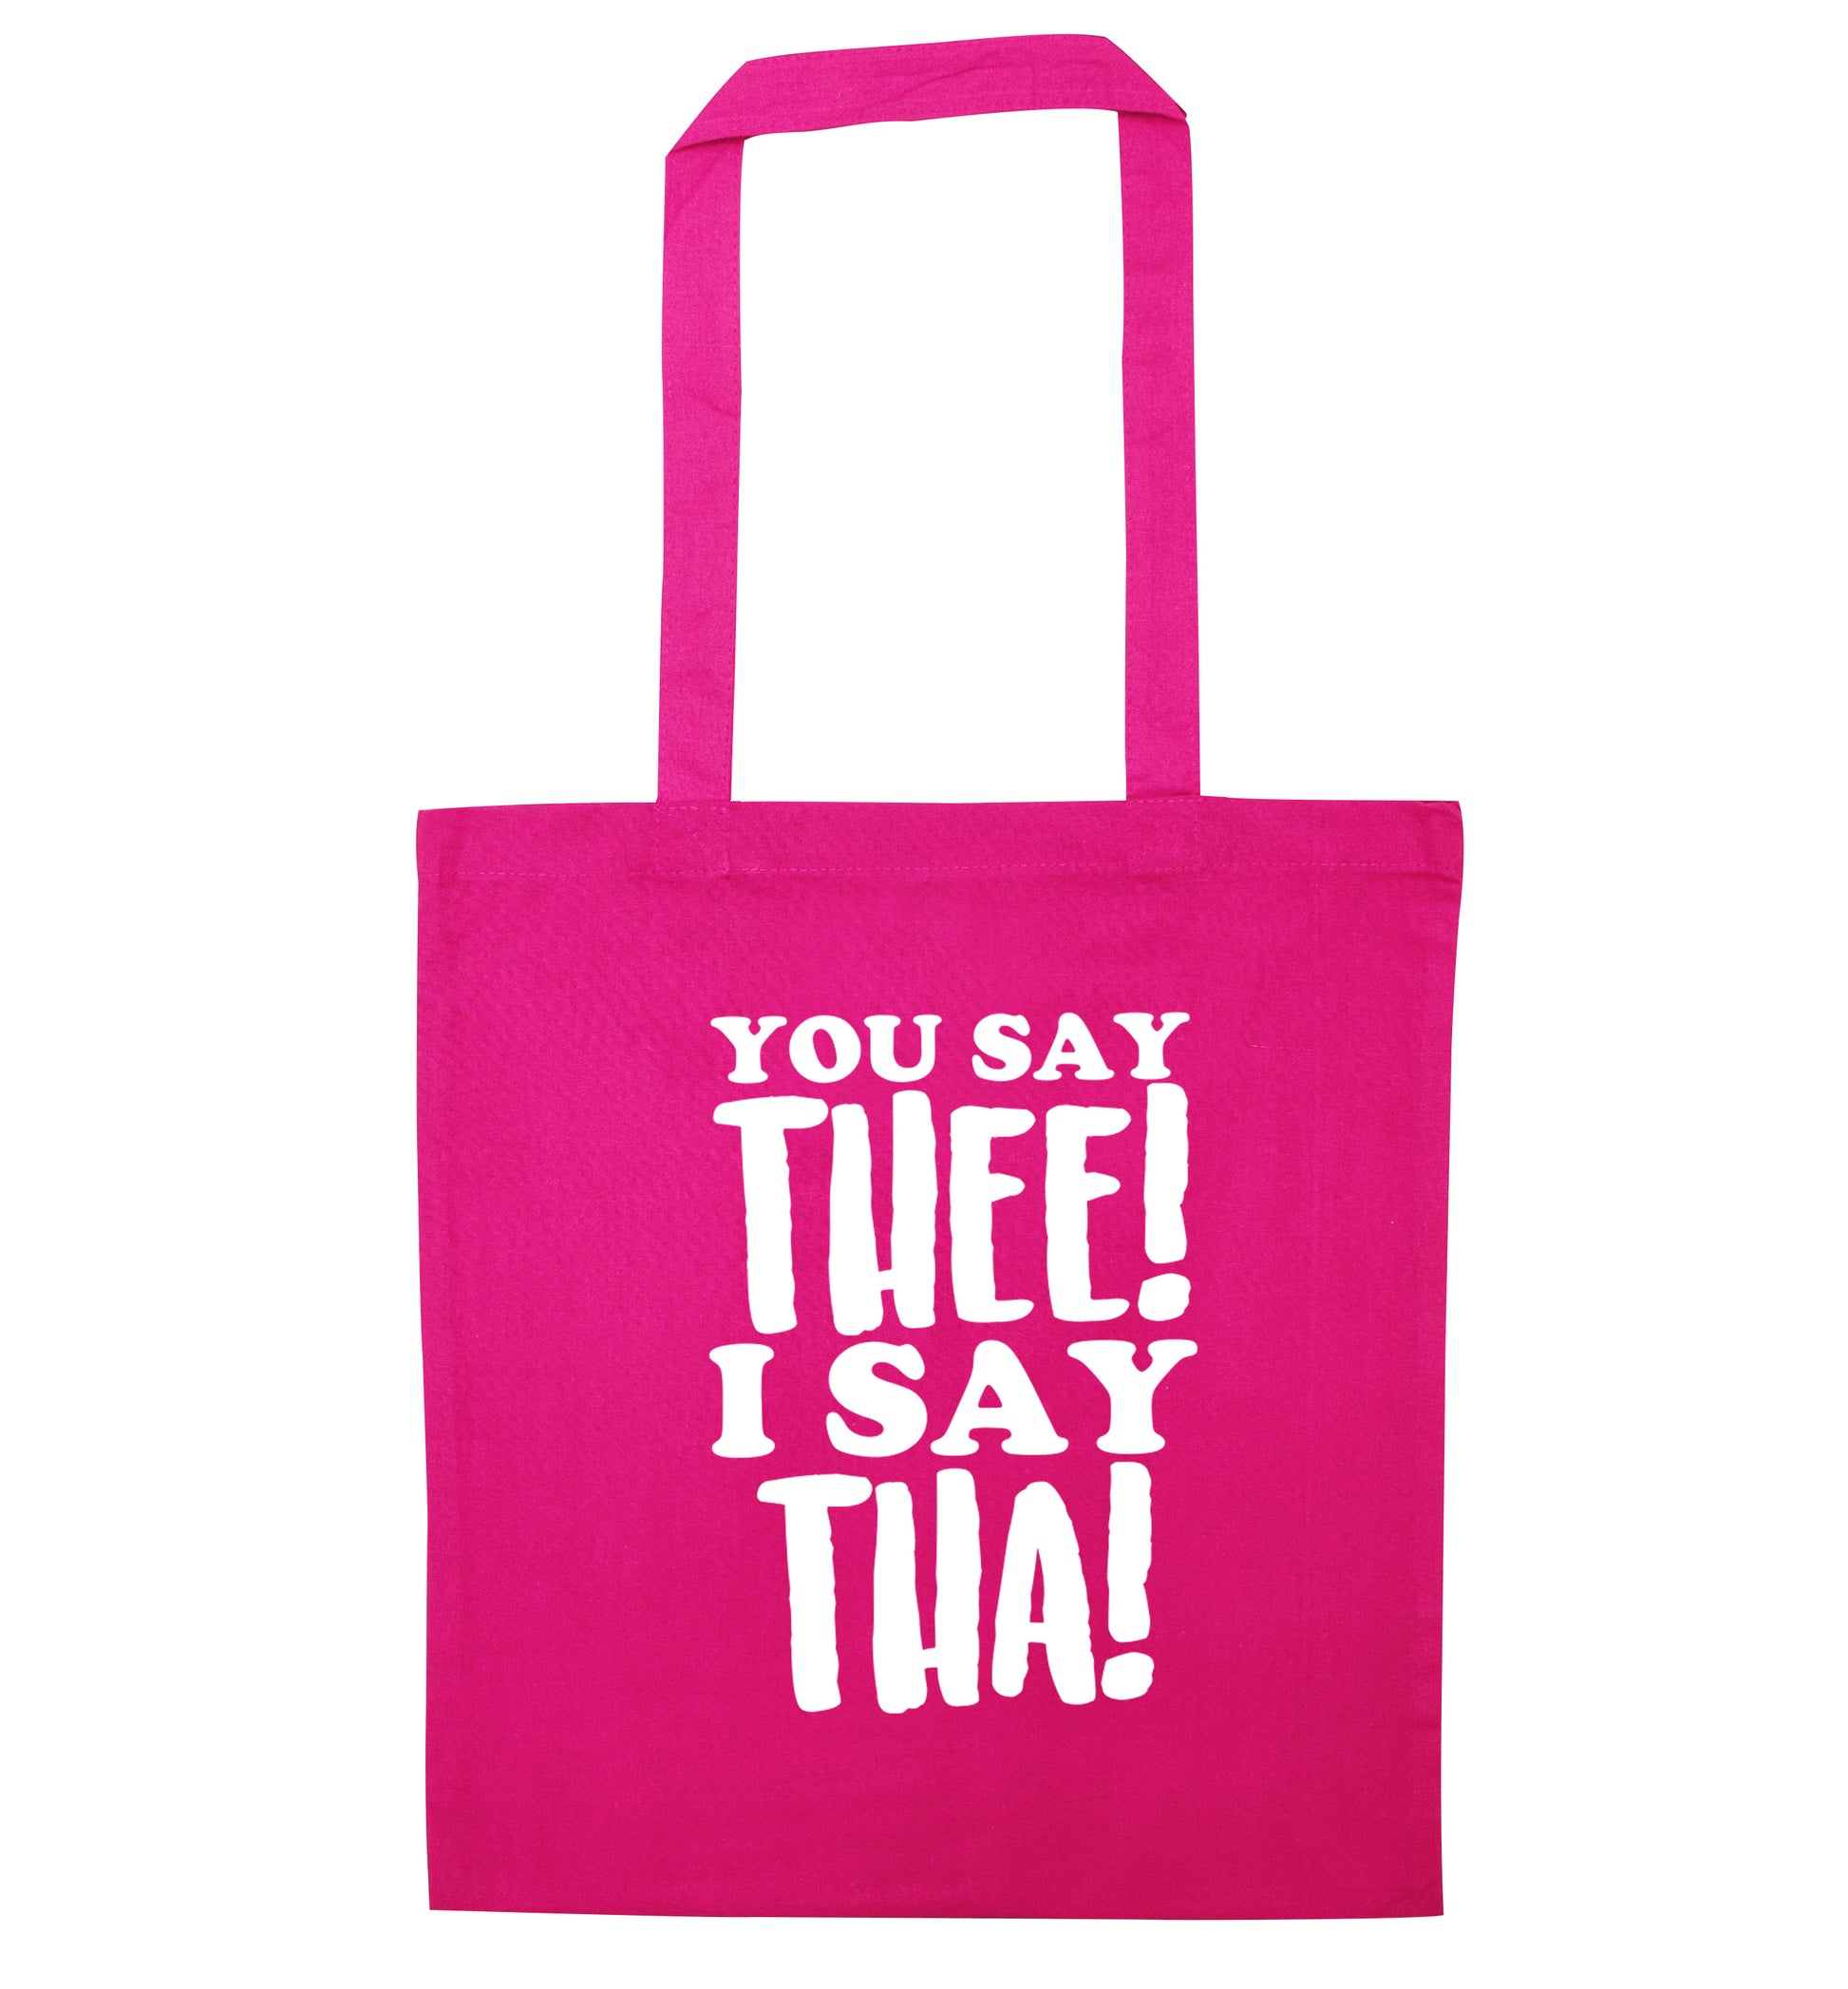 You say thee I say tha pink tote bag